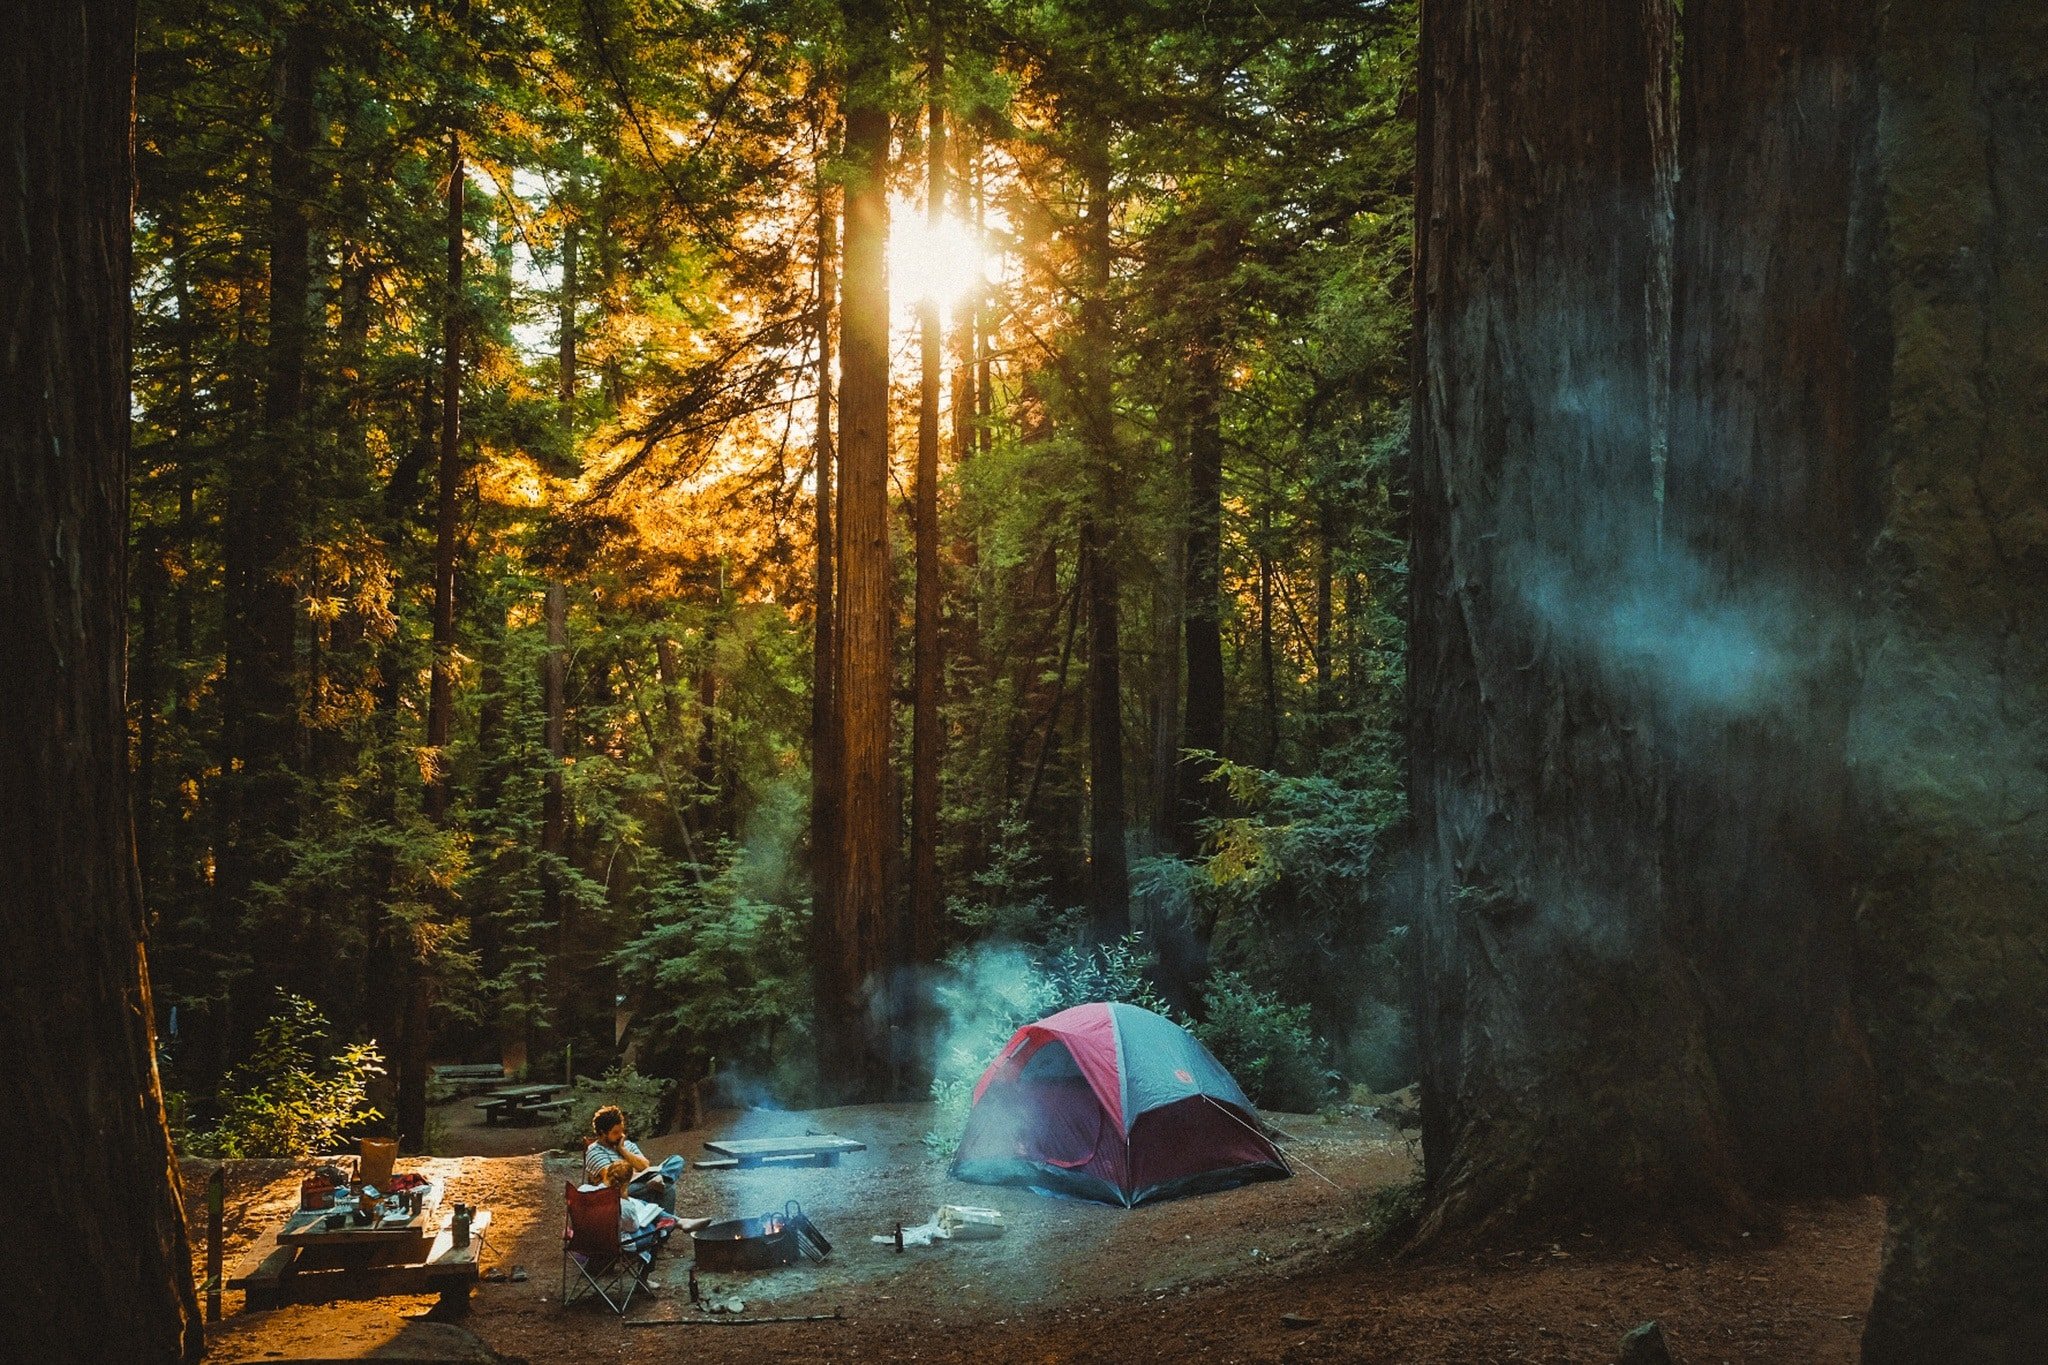 Look at the camp. Палатка в лесу. Природа палатка костер. Выезд на природу с палатками. Красивый лес и палатки.